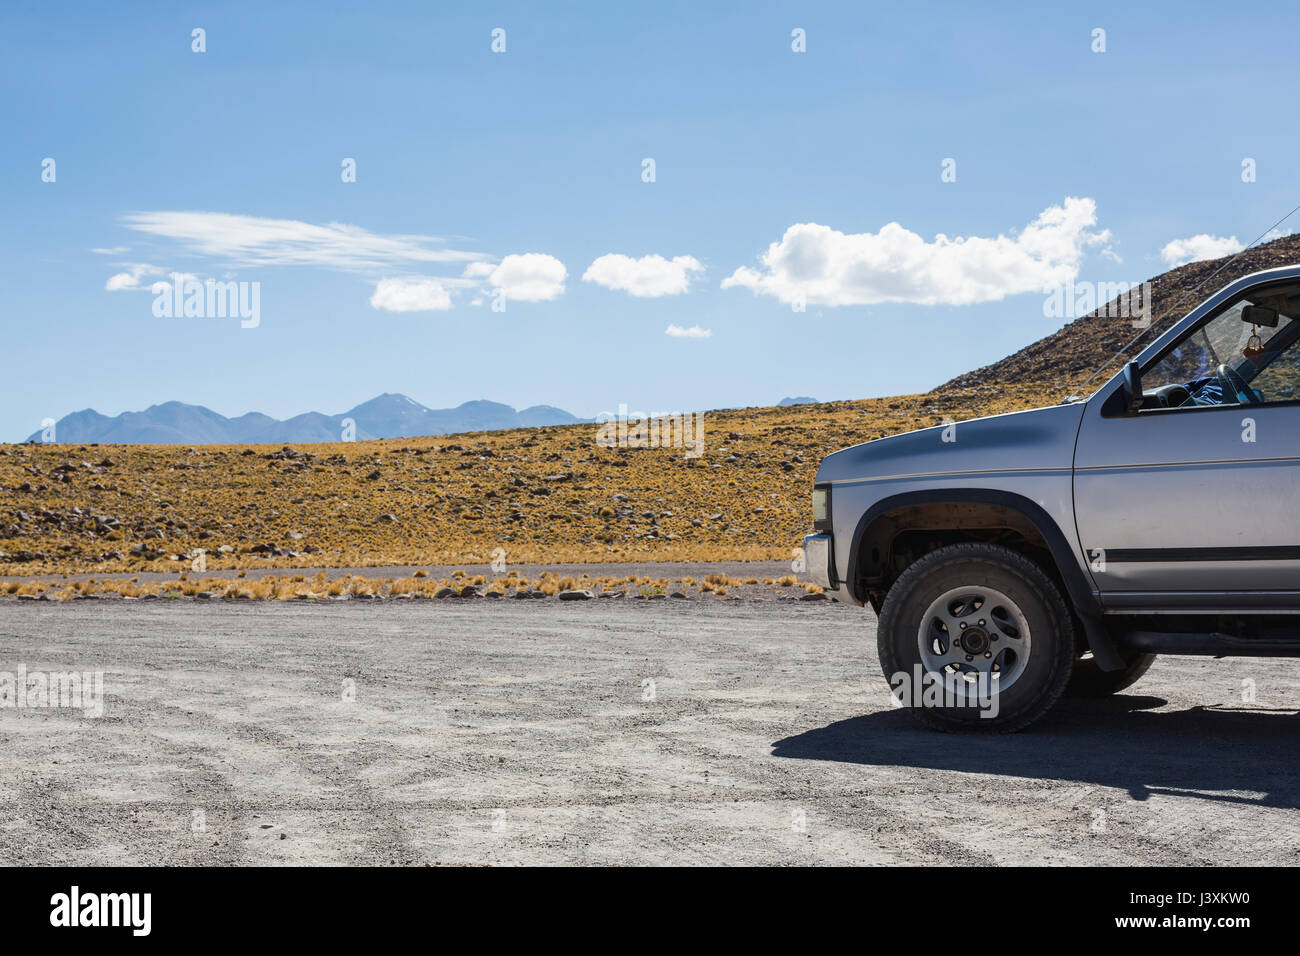 Vehicle, San Pedro de Atacama, Chile Stock Photo